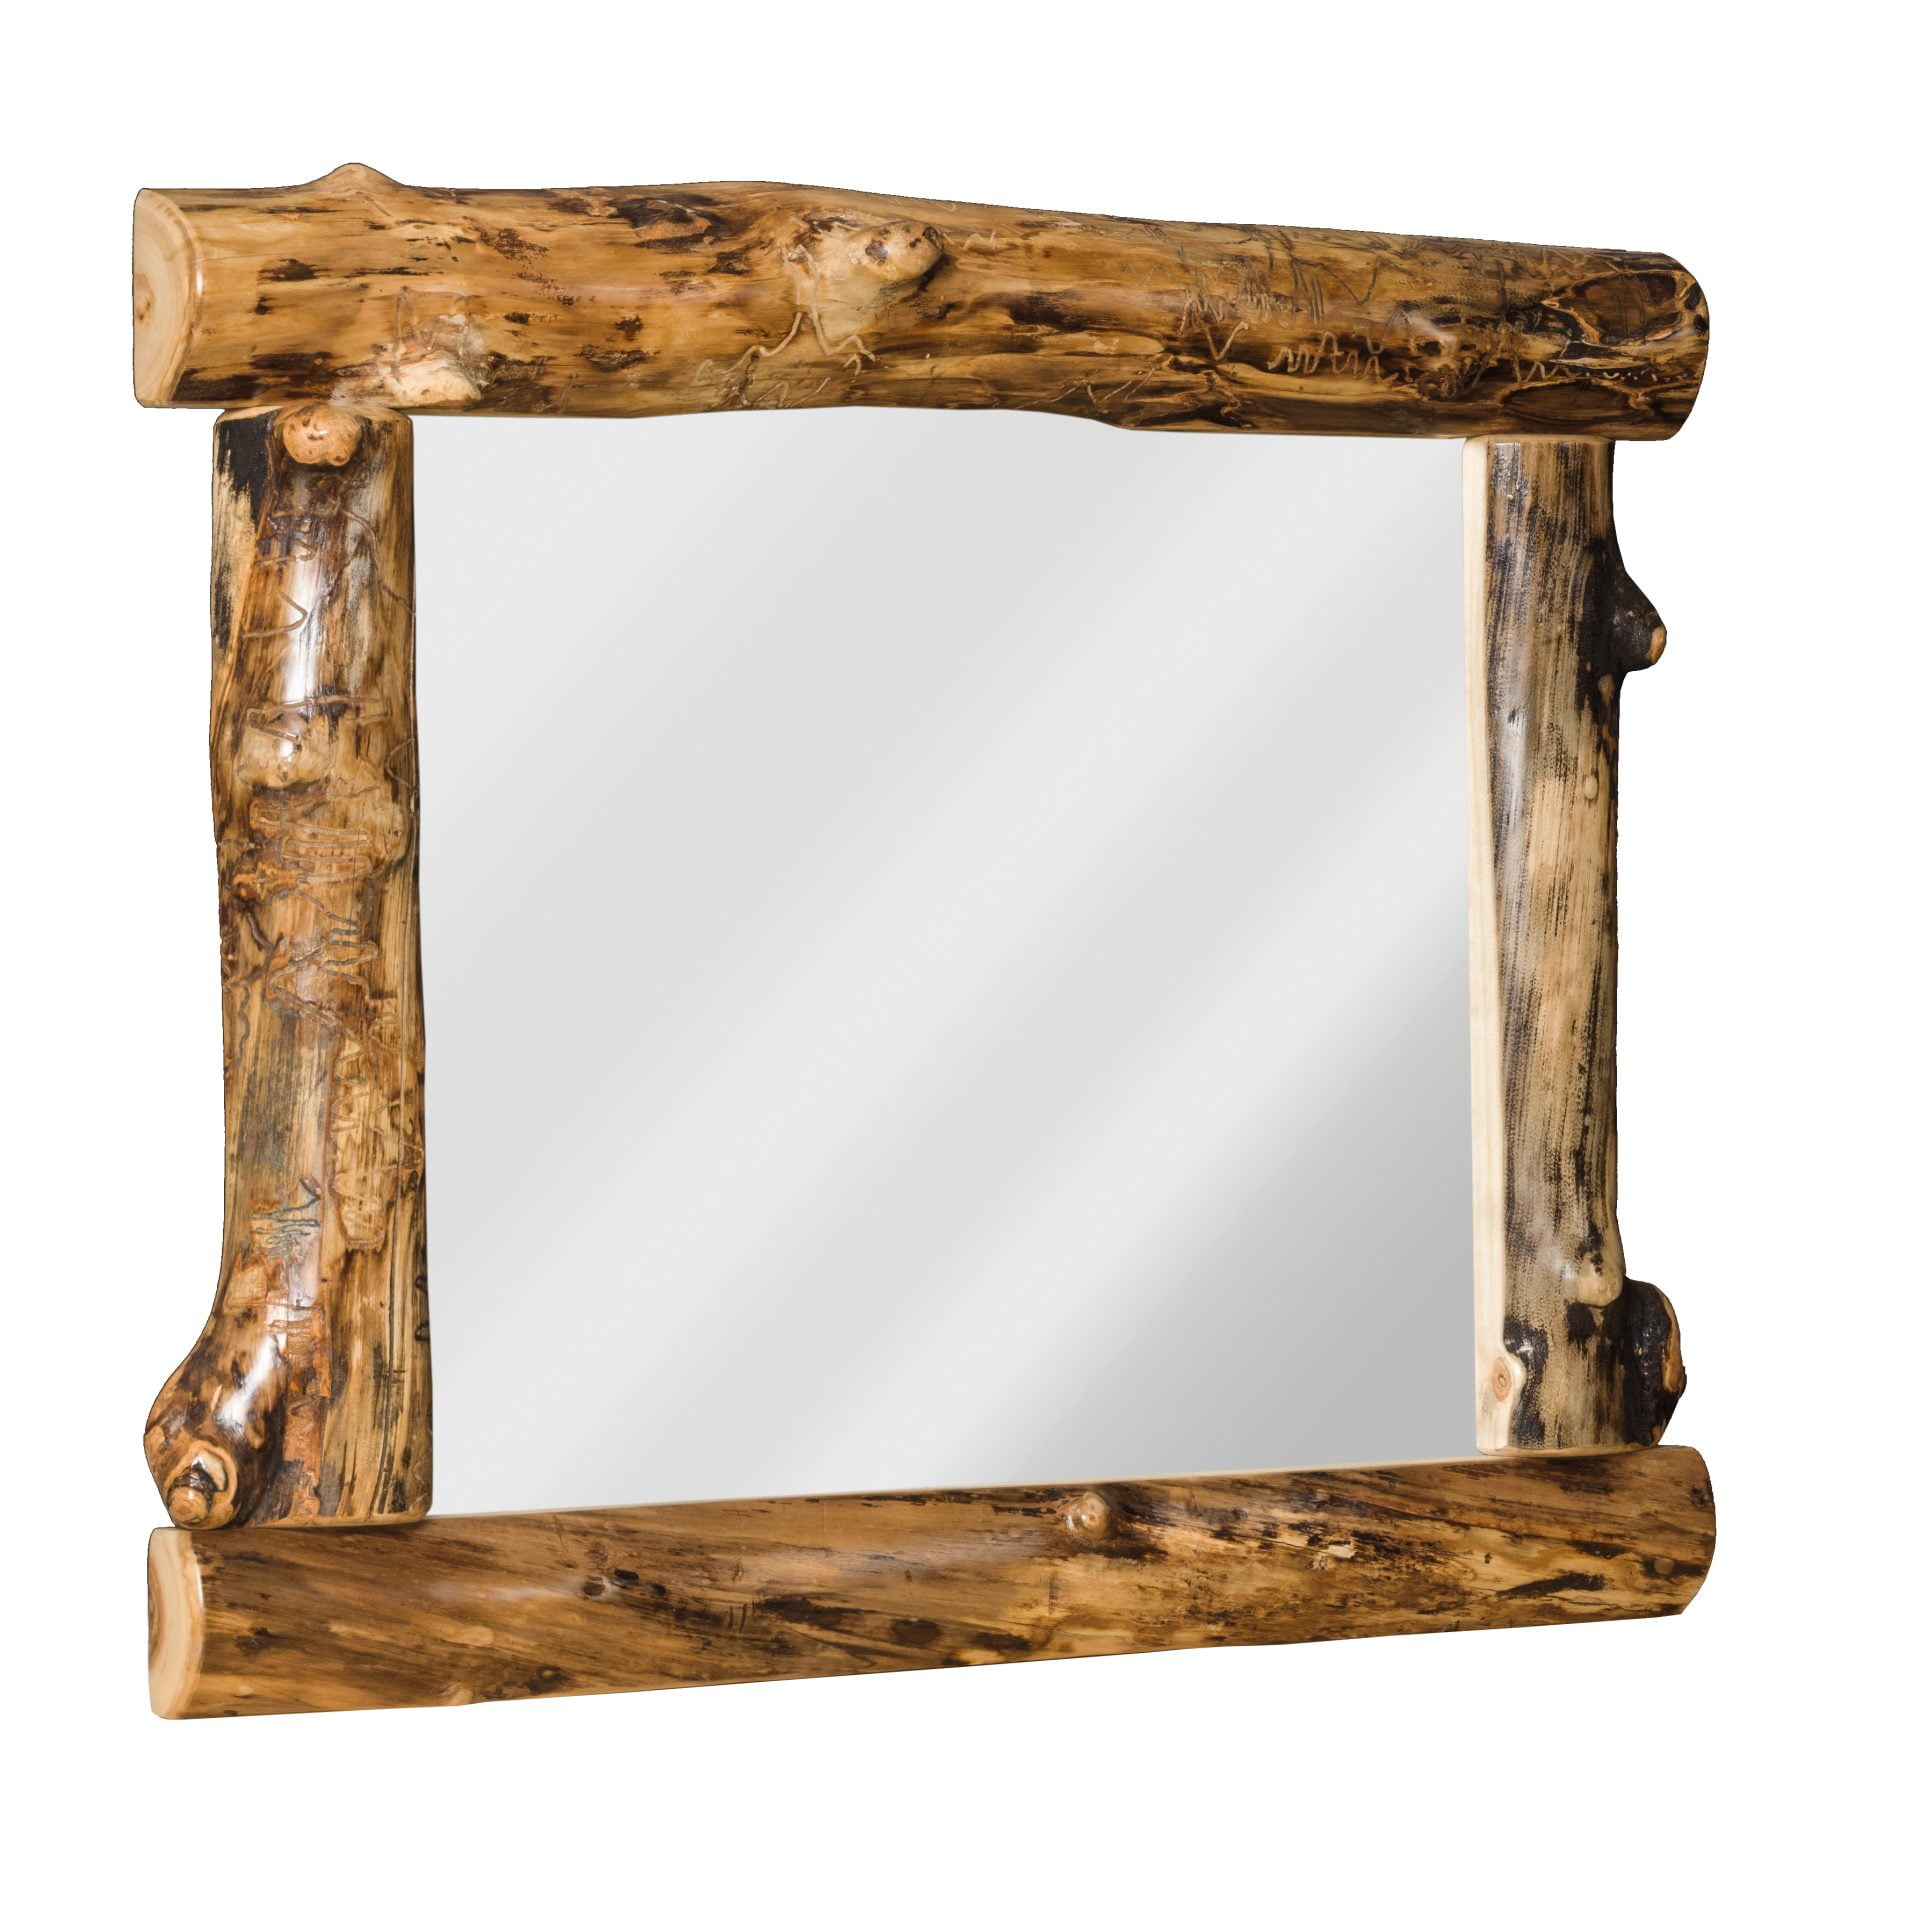 Rustic Aspen Log Dresser Mirror